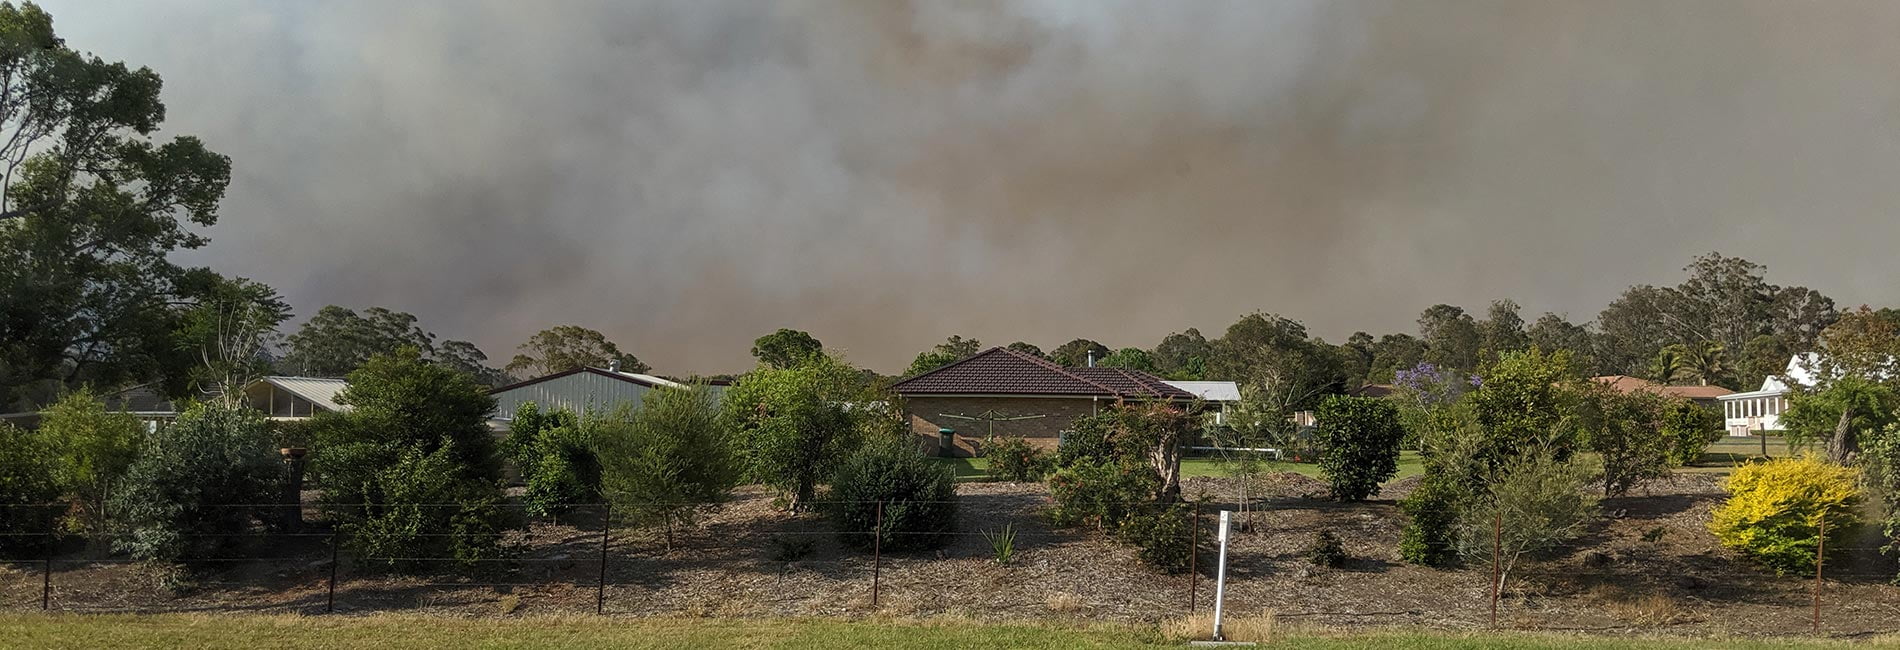 bushfire threat nsw australia